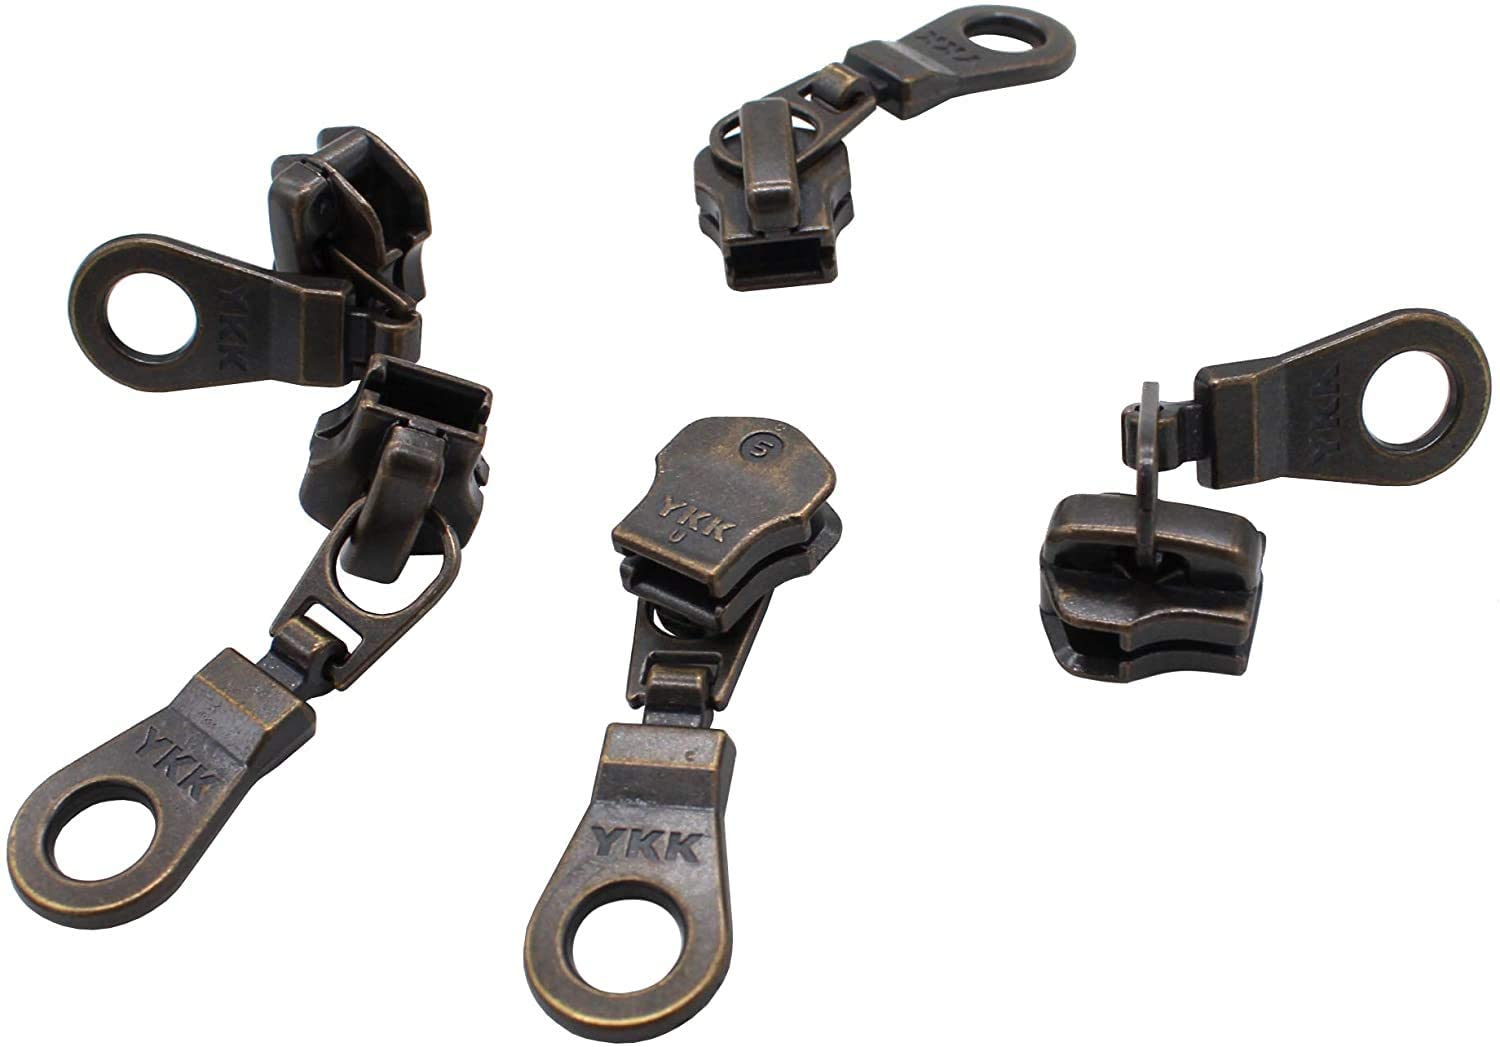 Zipper Repair Kit - #5 Zipper Sliders with Donut Pulls - Fancy